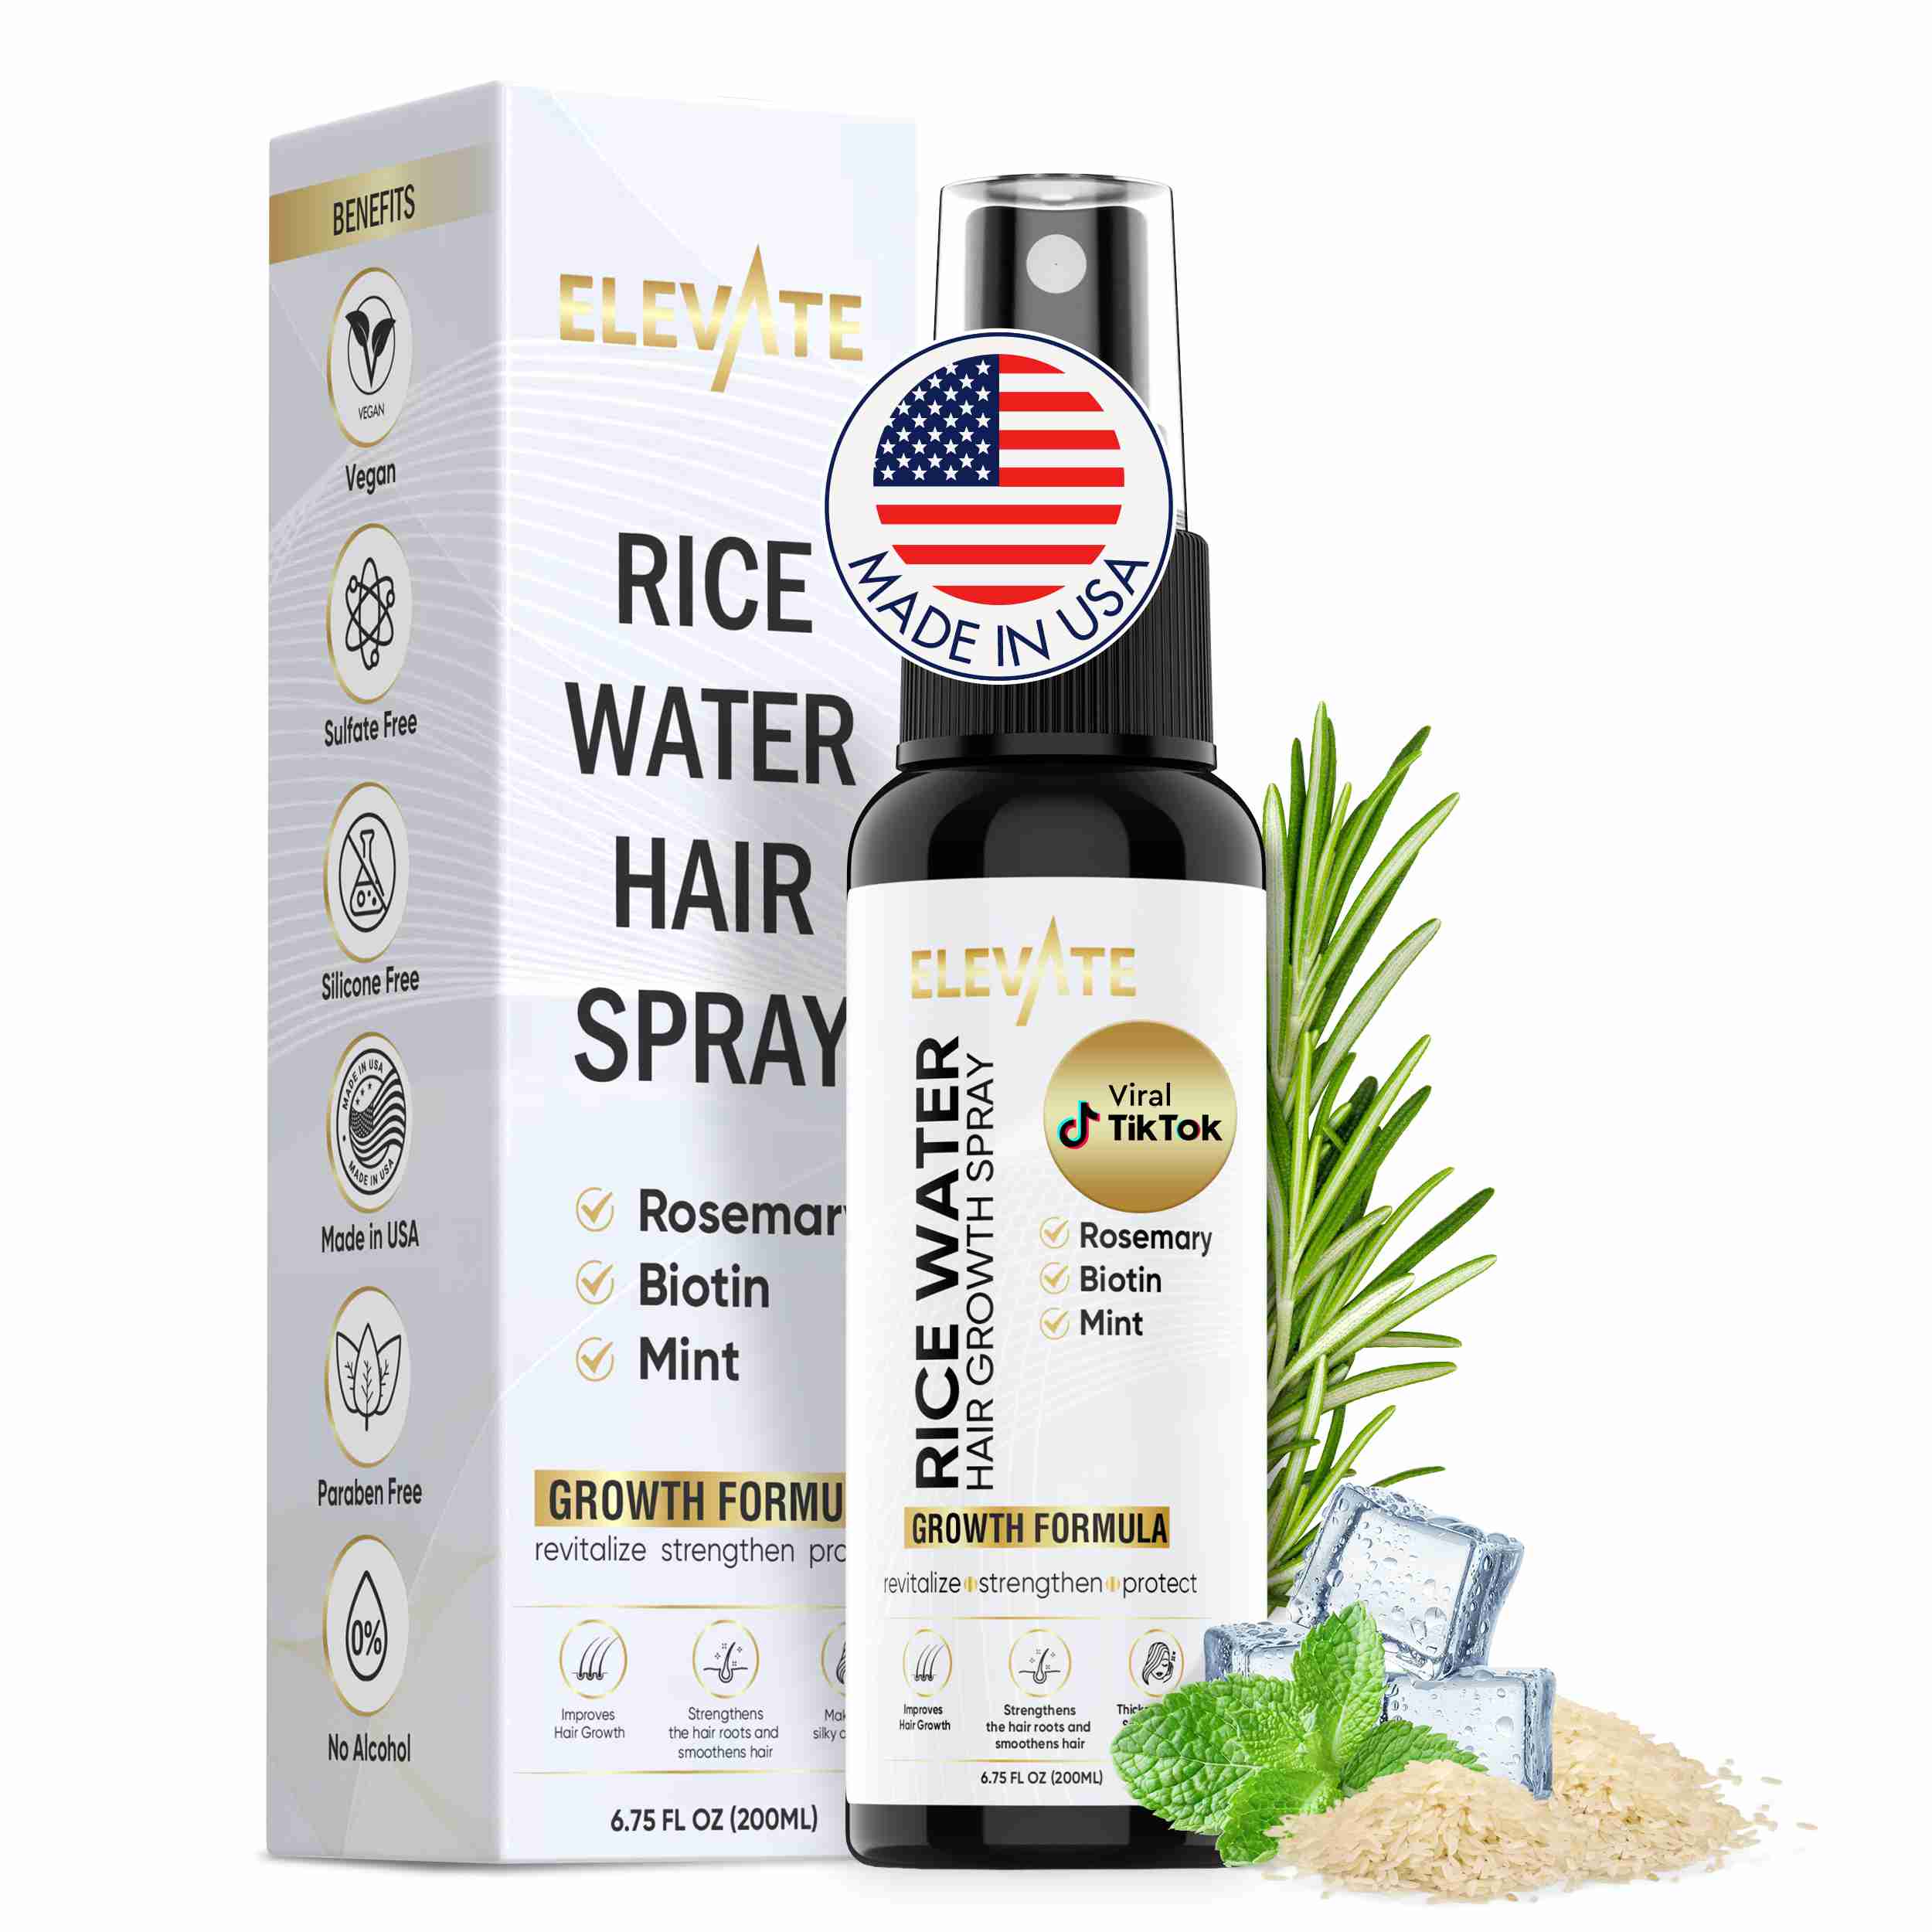 rice-water-spray-hair-growth-biotin-caffeine-vegan-natural with cash back rebate